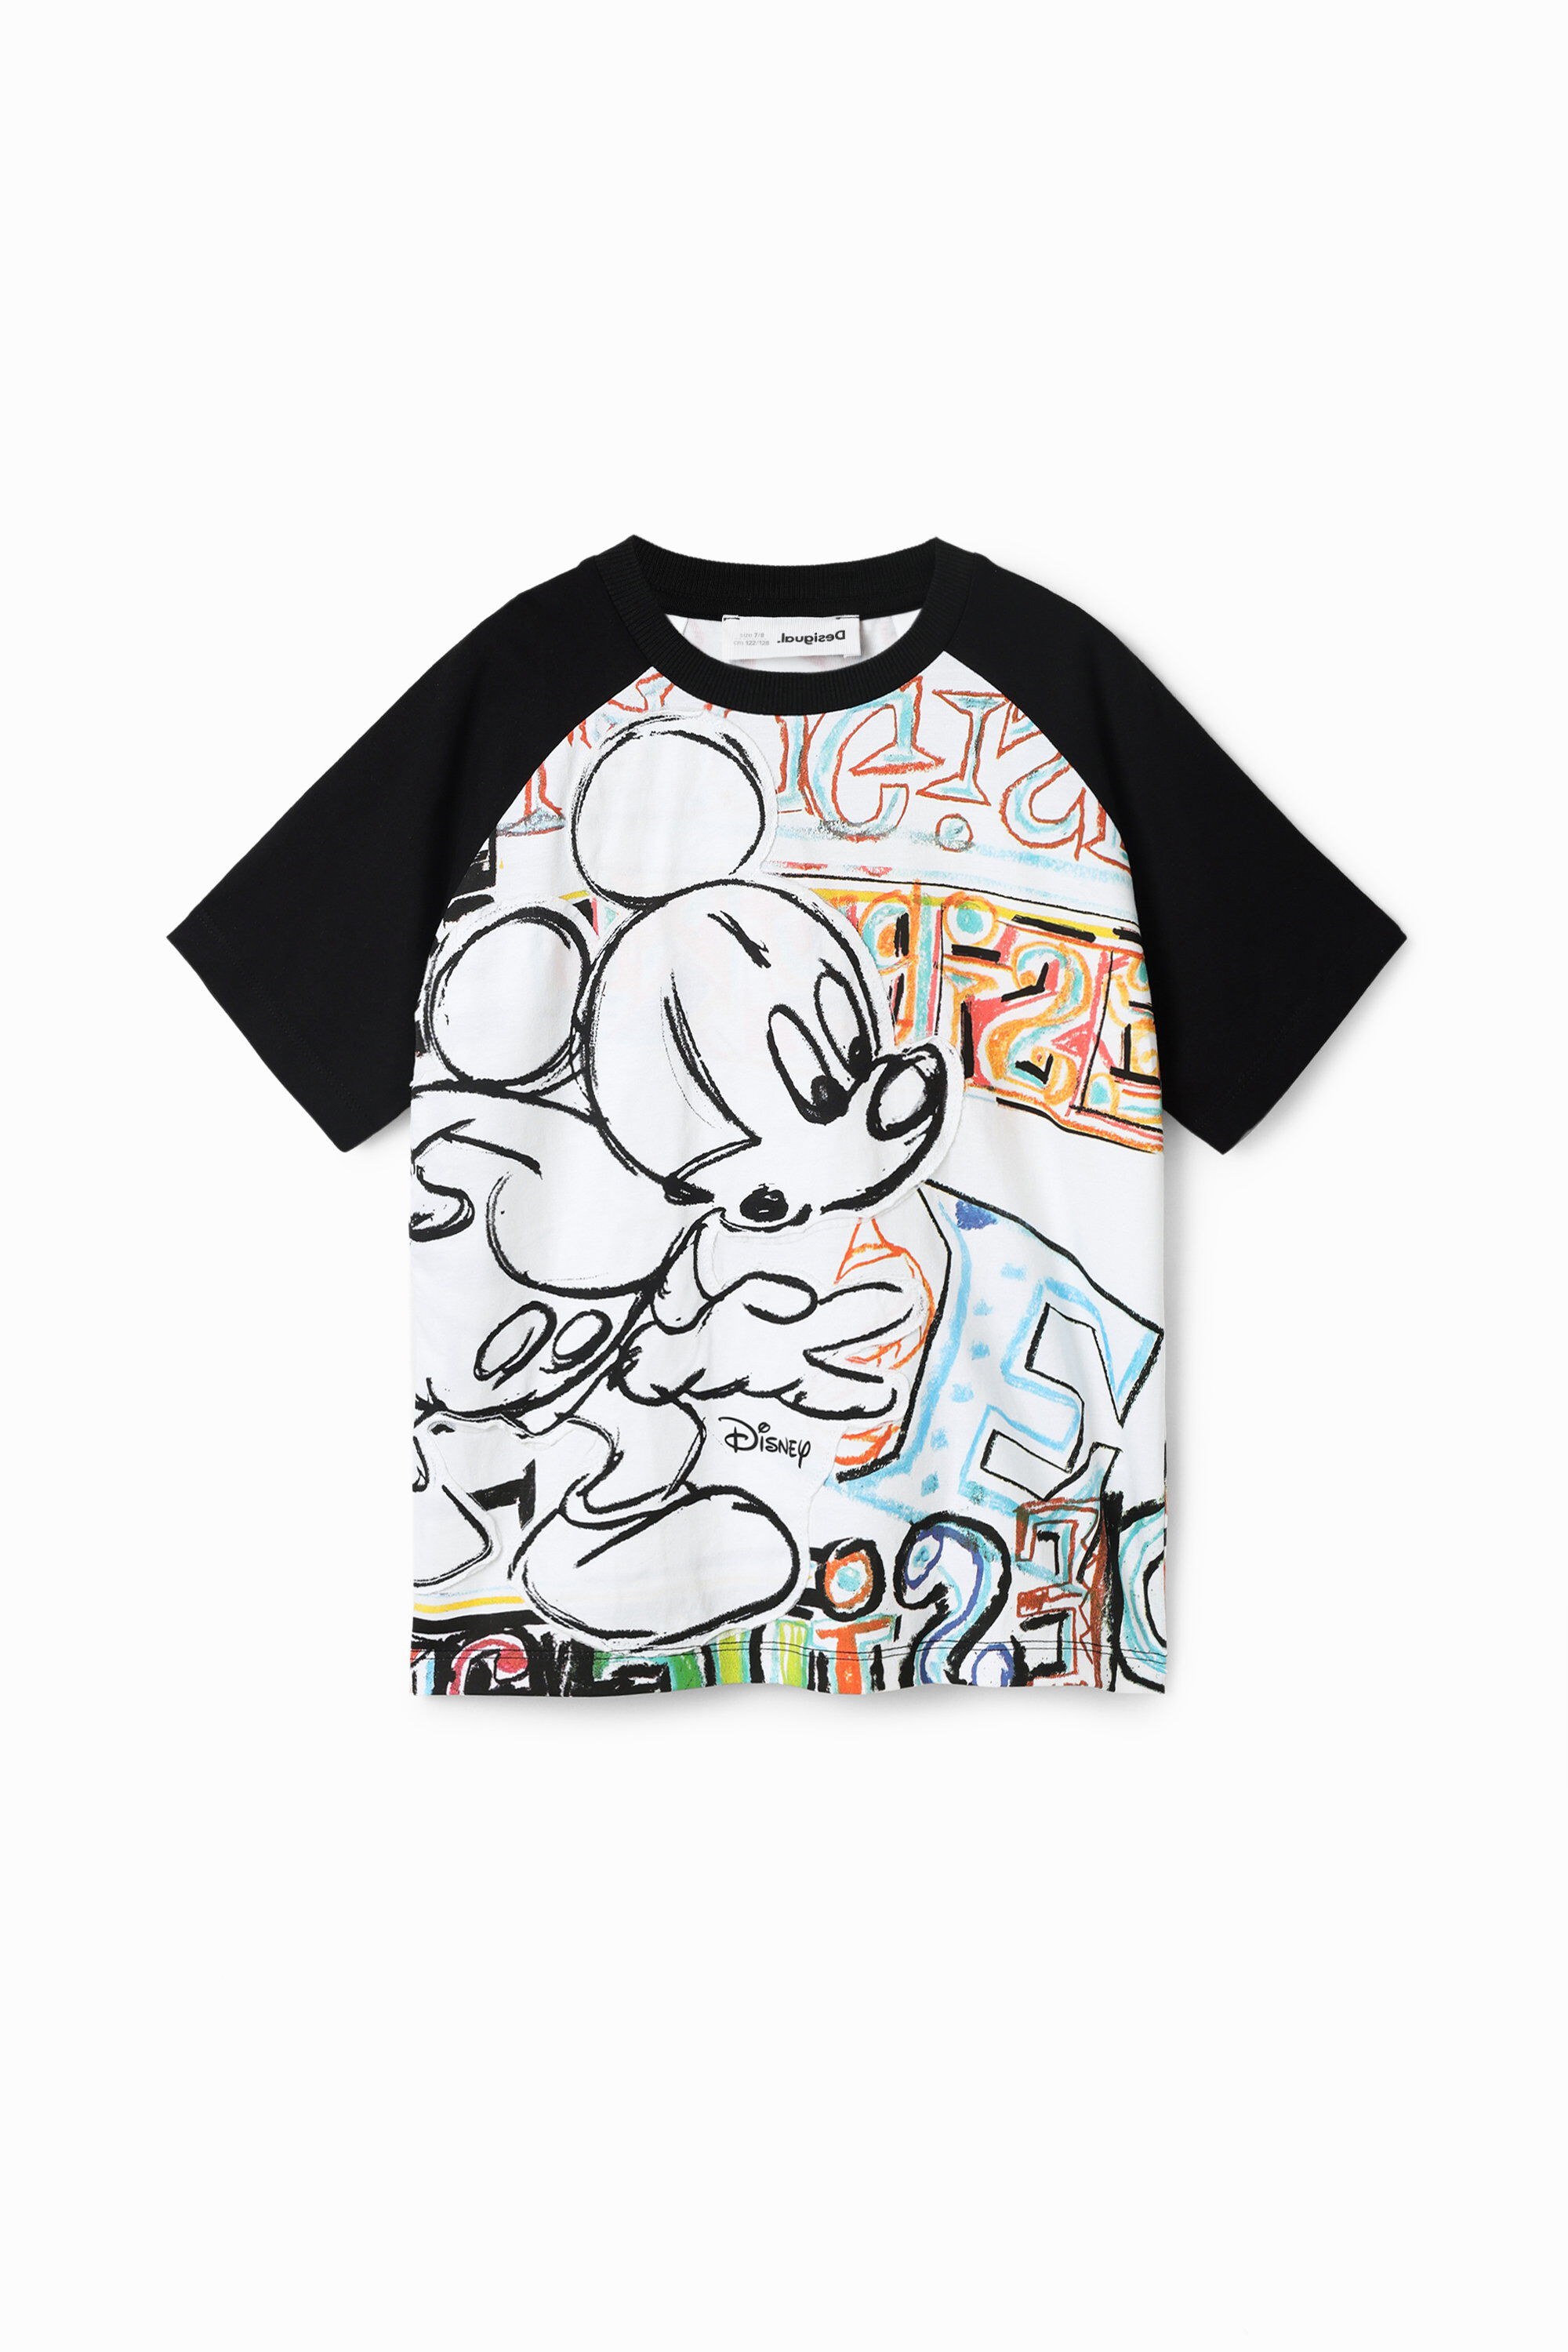 Desigual Disney's Mickey Mouse illustration T-shirt